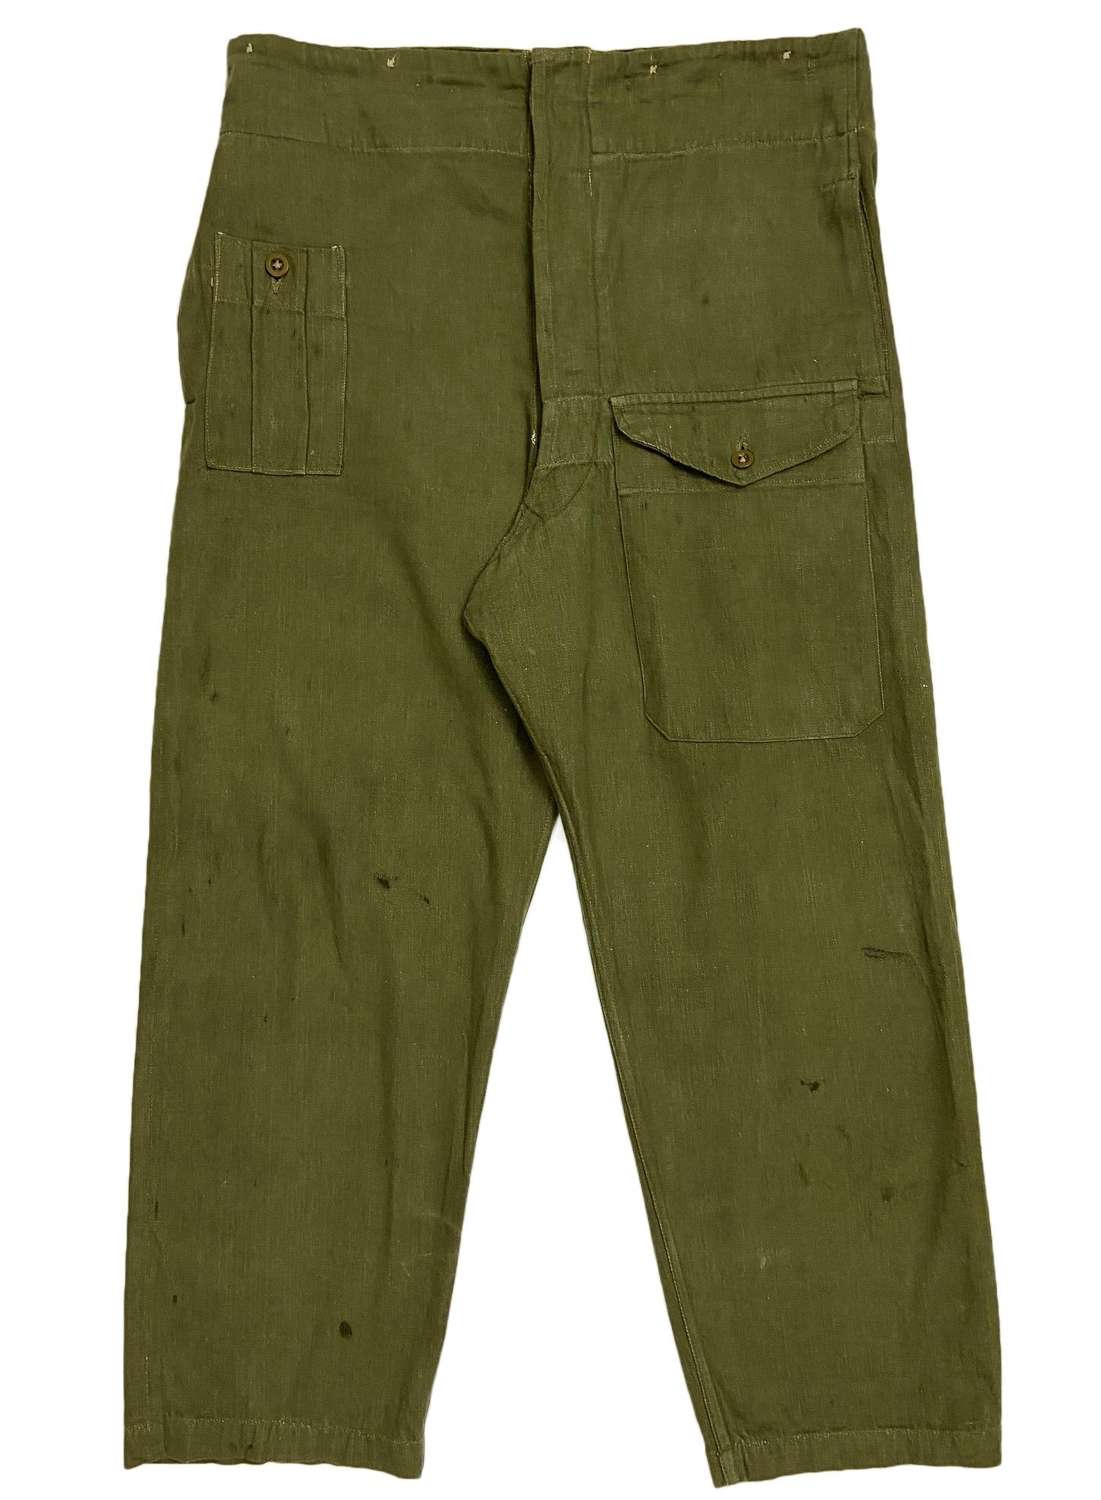 Original 1954 Dated British Army Denim Battledress Trousers - Size 4